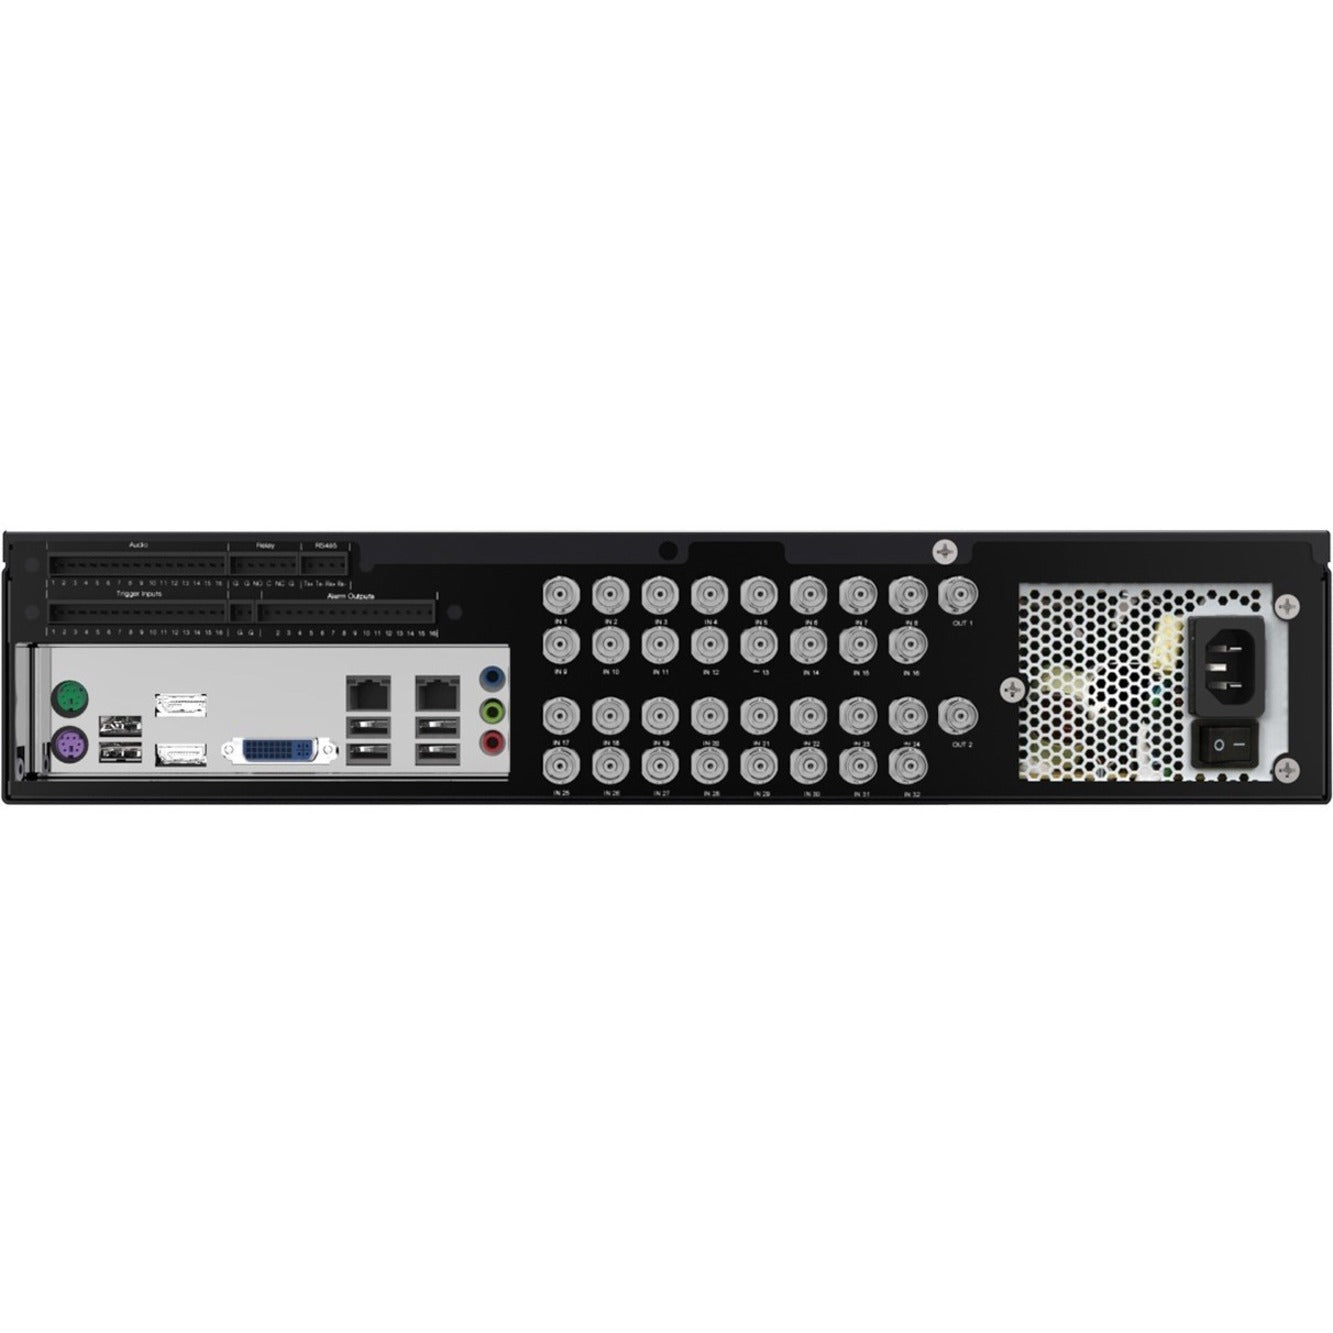 Exacq 3208-04T-R2A exacqVision A Hybrid Video Recorder, 4 TB HDD, Motion JPEG, H.264, 30 fps